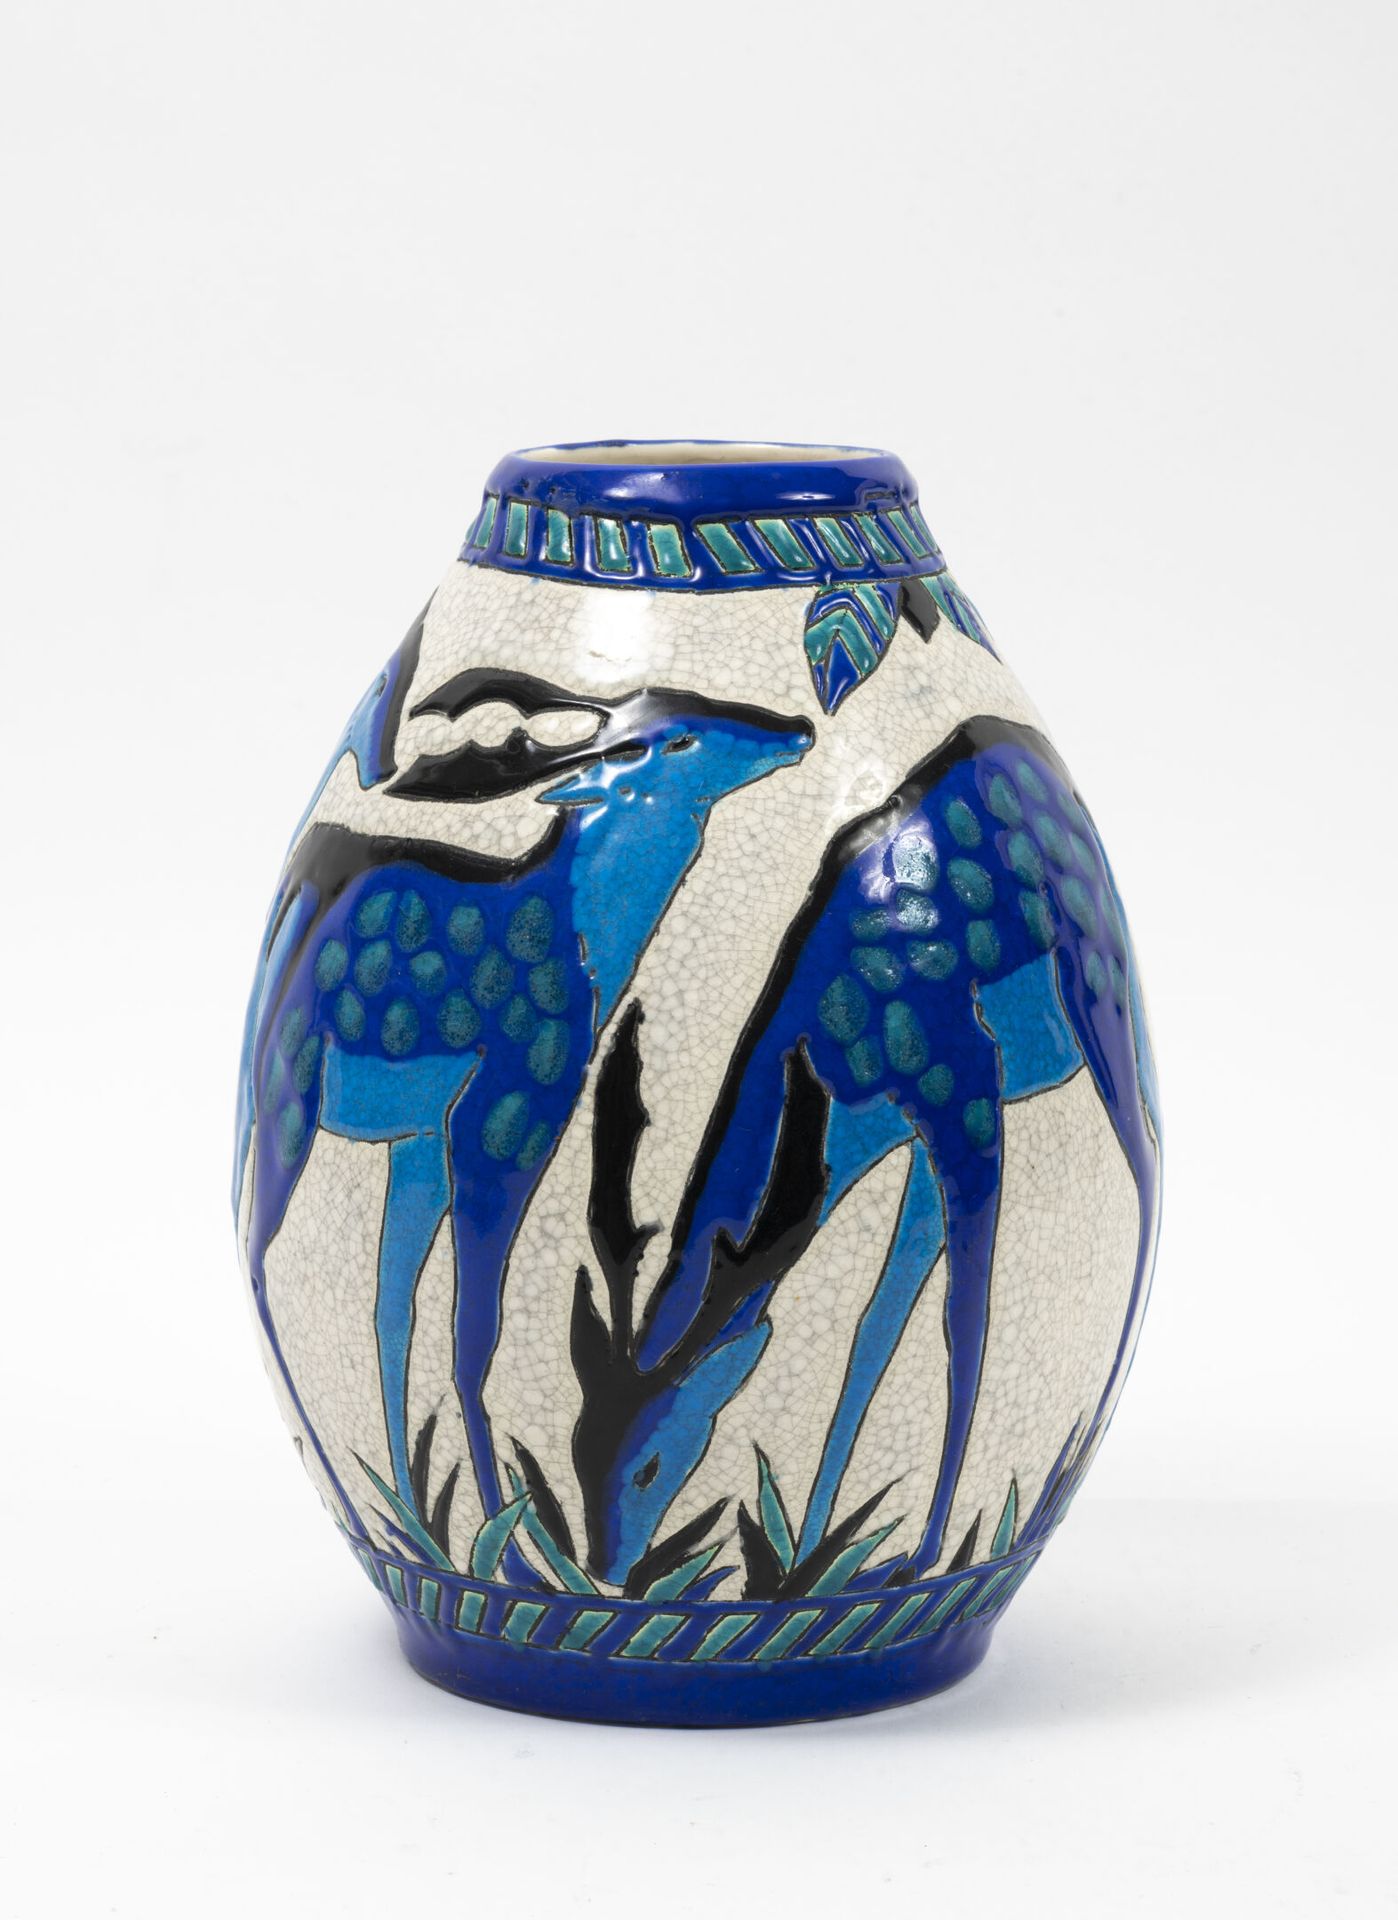 Charles CATTEAU (1880-1966) 卵形花瓶。

多色珐琅彩陶器，有鹿和几何叶子的旋转装饰。

有签名，编号为D.943，背面有印章。

B&hellip;